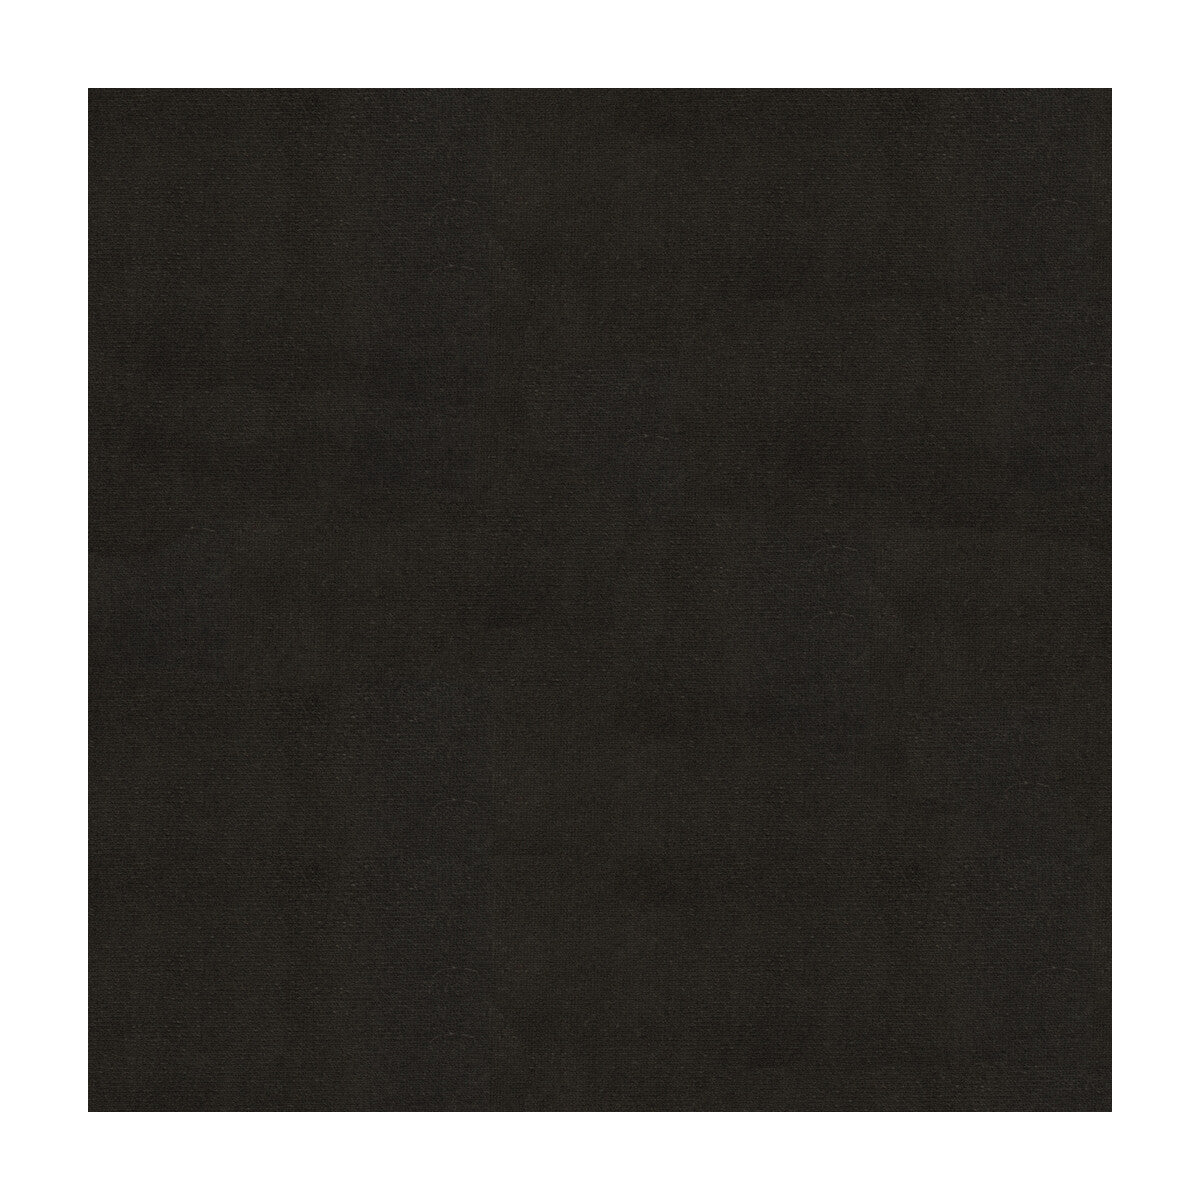 Lubeck Cotton Velvet fabric in graphite color - pattern BR-89779.964.0 - by Brunschwig &amp; Fils